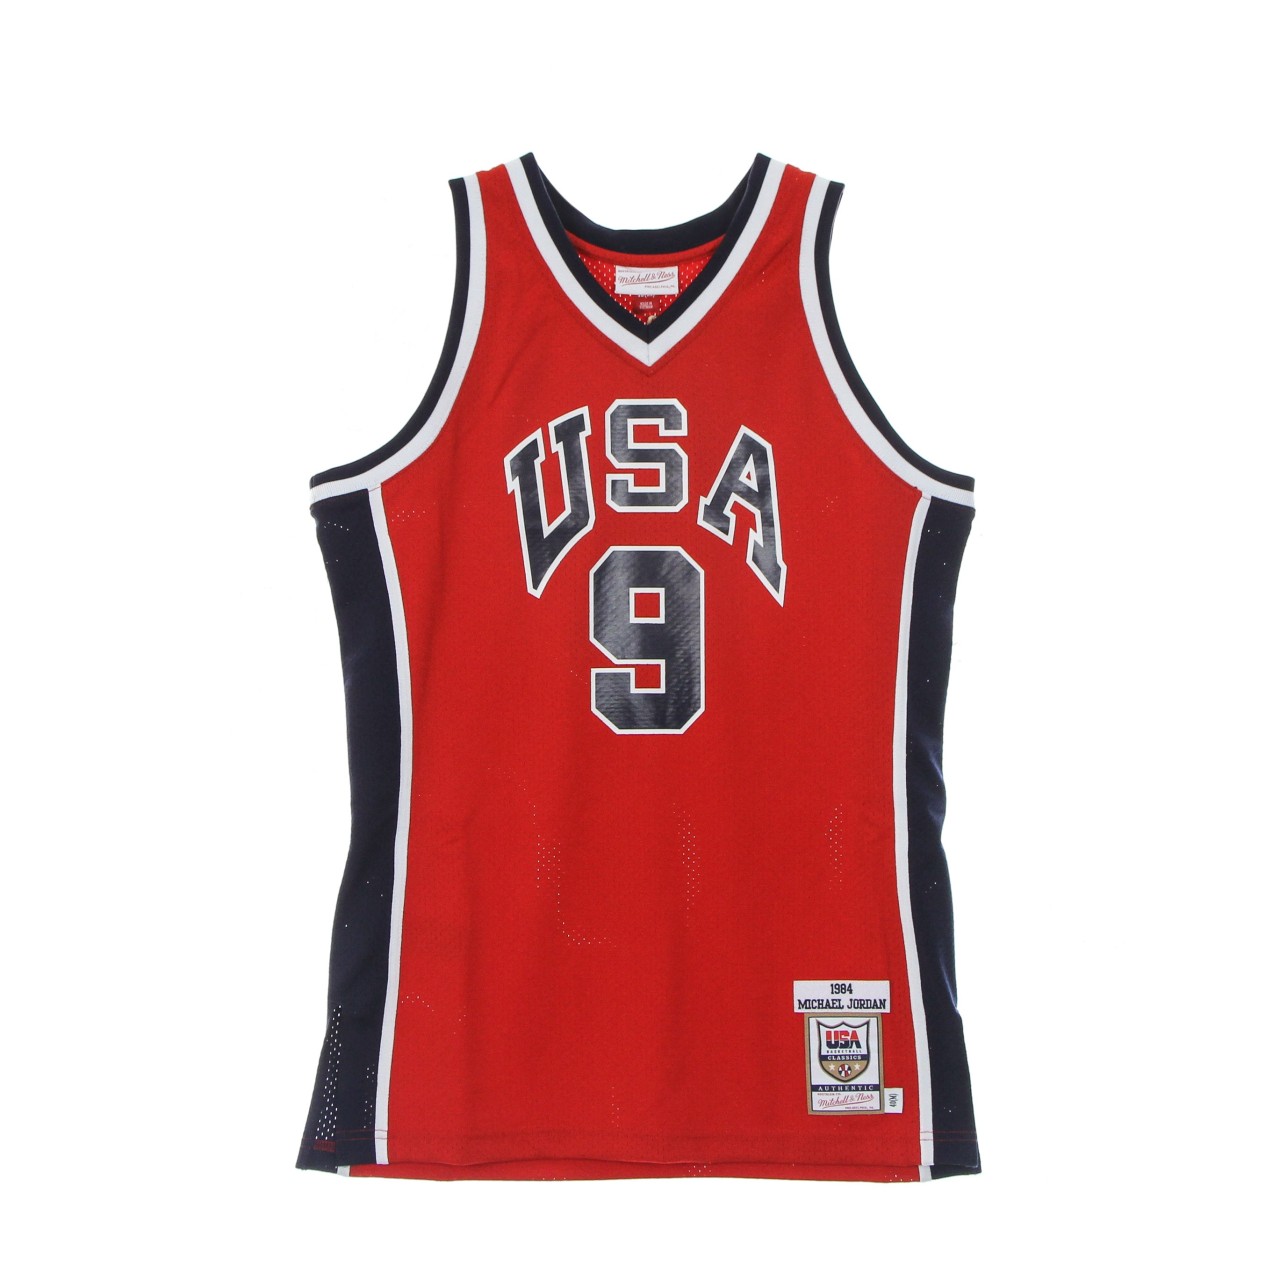 MITCHELL & NESS NBA AUTHENTIC JERSEY HARDWOOD CLASSICS NO 9 MICHAEL JORDAN 1984 TEAM USA AJY4AC19080-USASCAR8